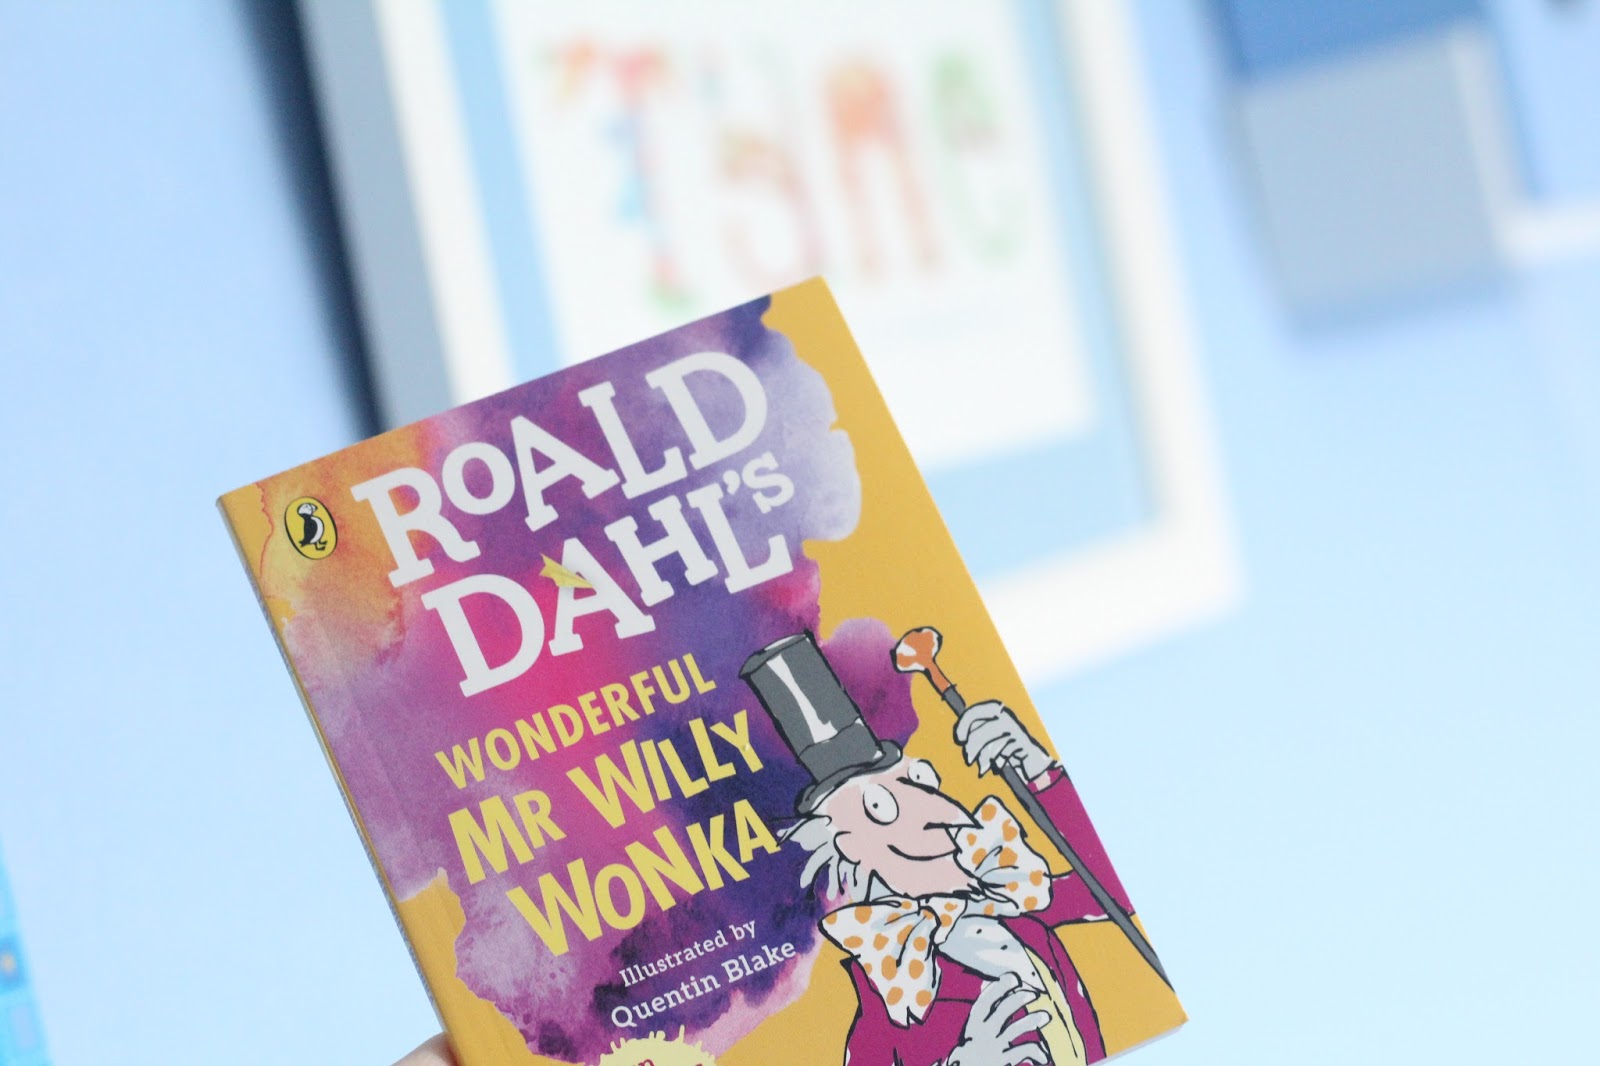 Amazing Matilda Book from Matilda McDonalds Happy Meal Toy 2017 Roald Dahl's 